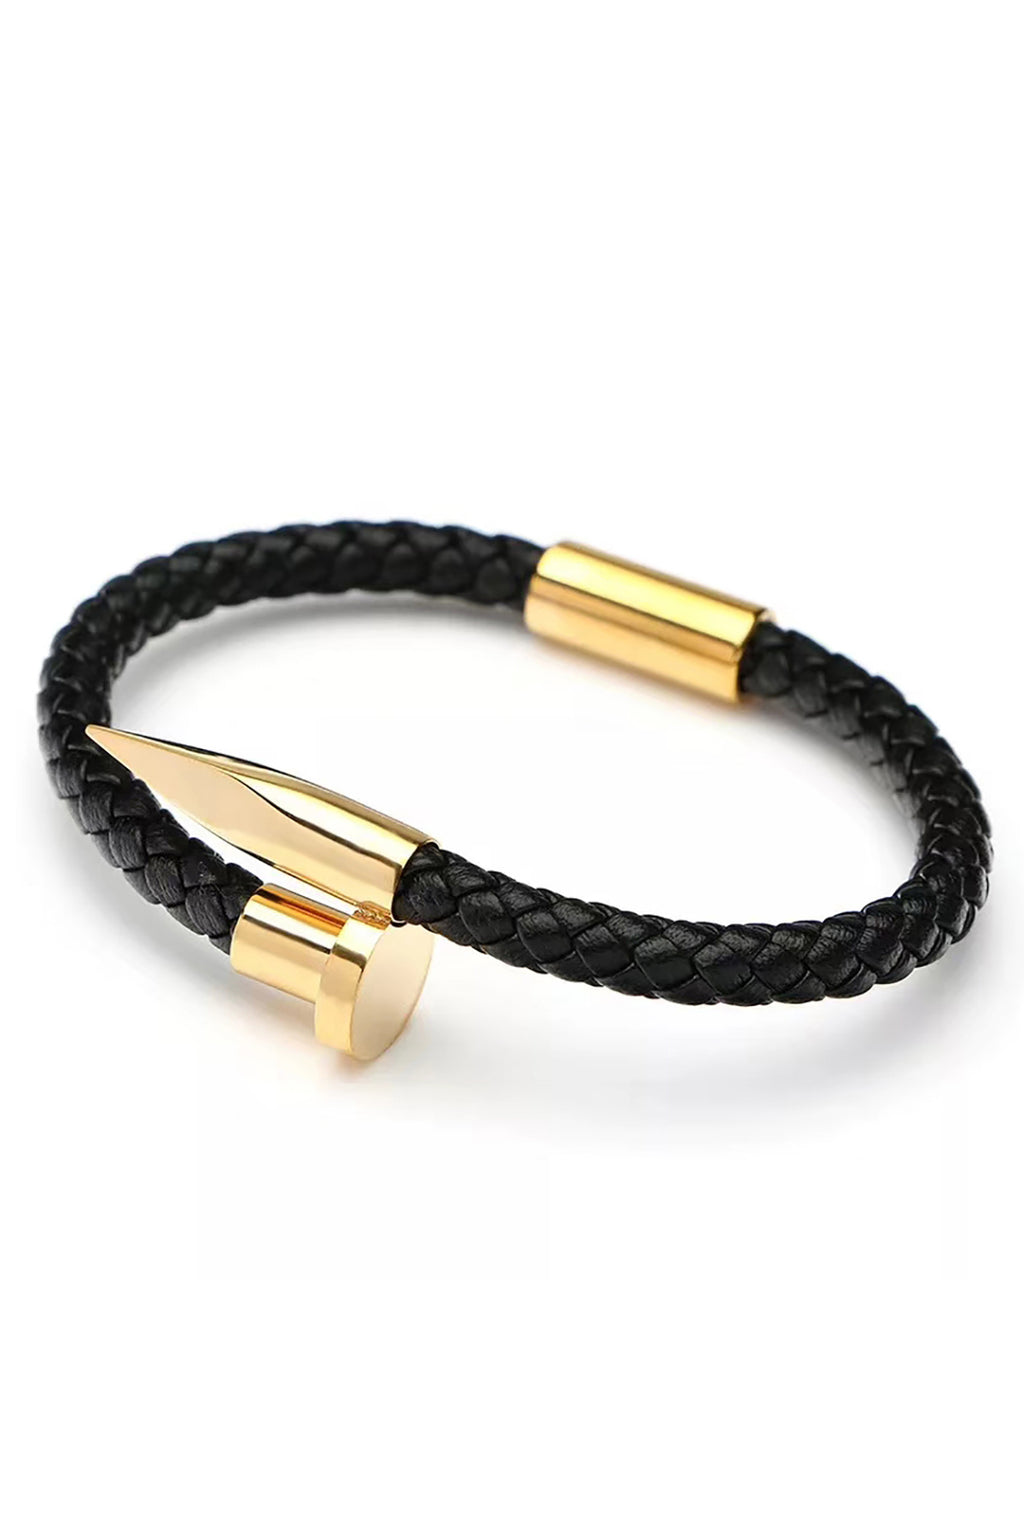 Gold spike leather cuff bracelet.